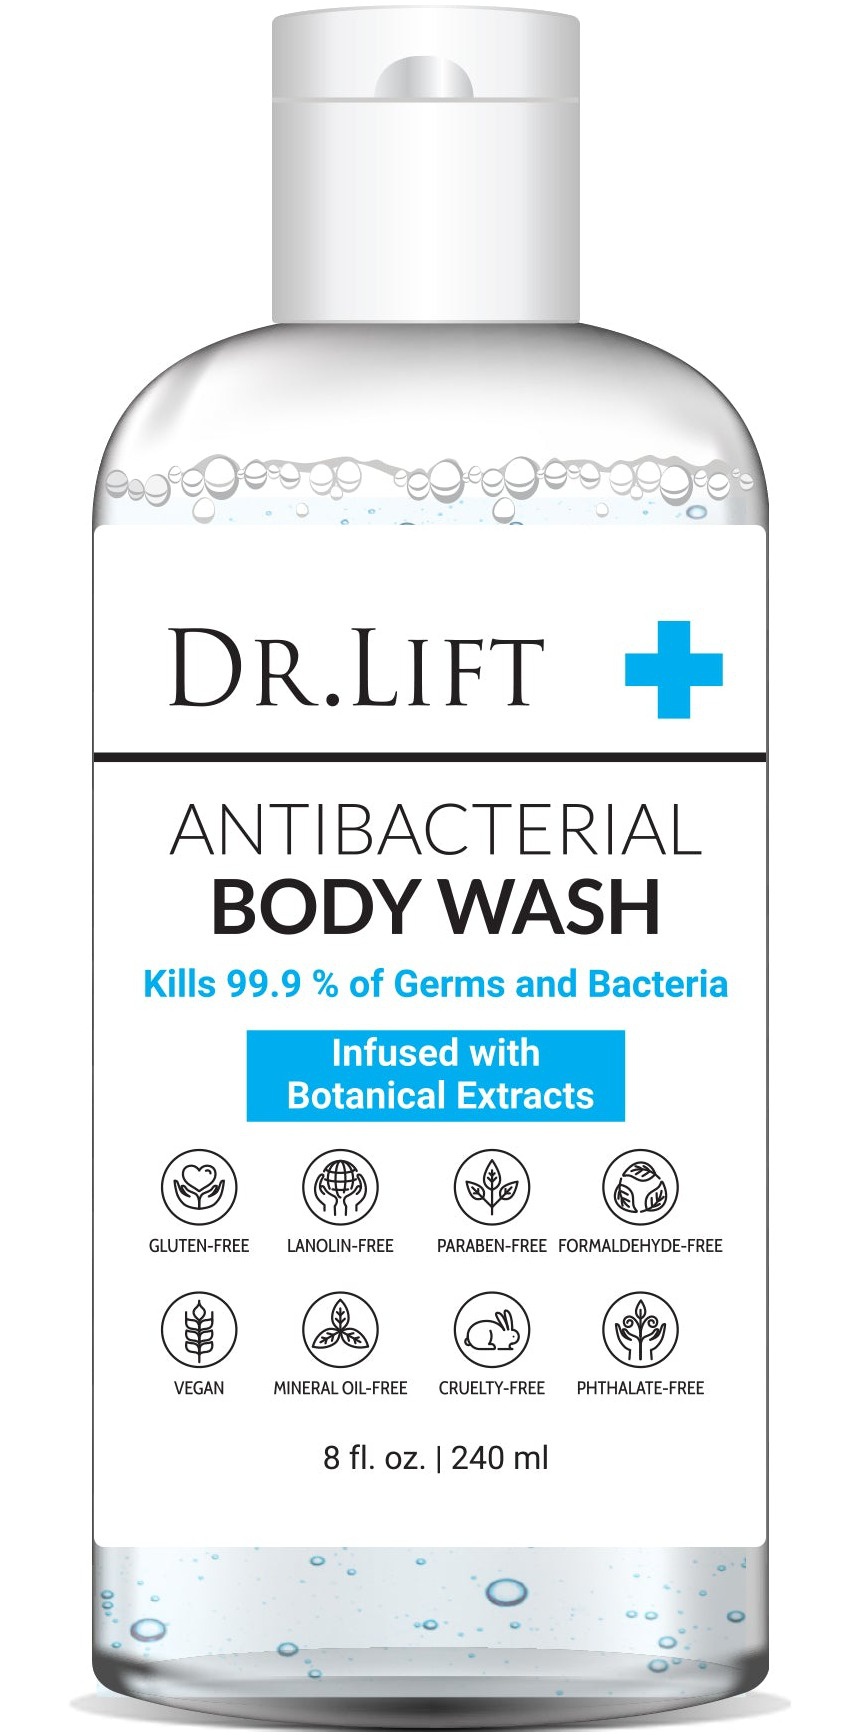 DR. LIFT Antibacterial Body Wash